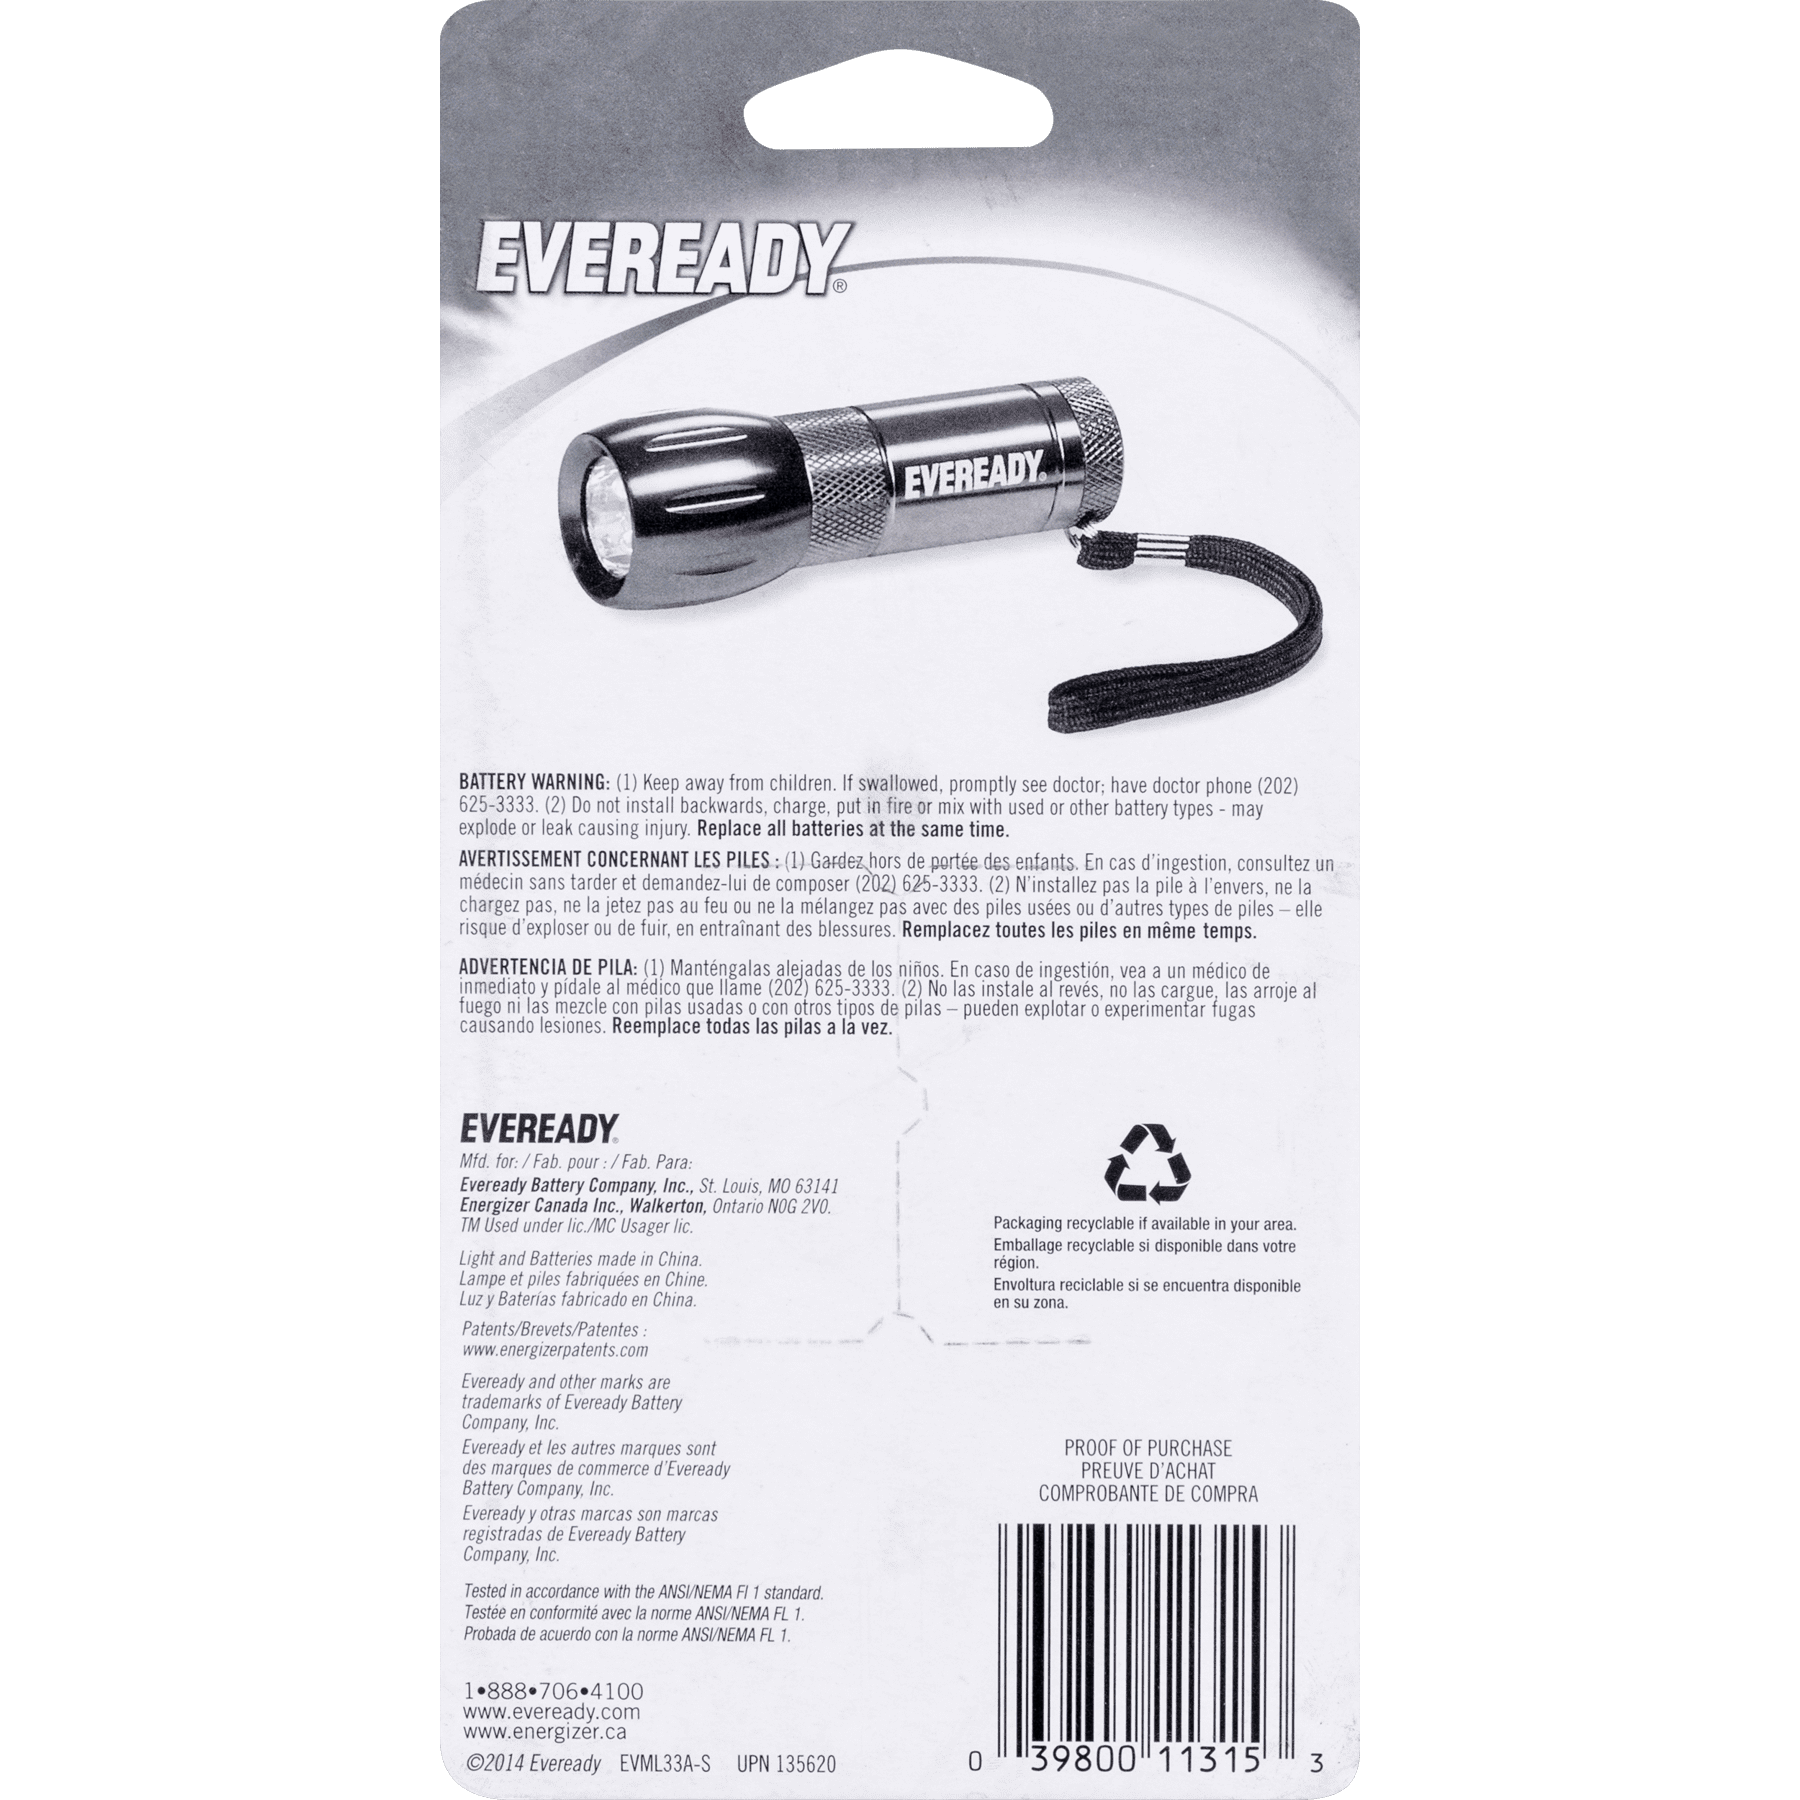 Eveready Compact Metal LED Flashlight - 1 Pack, 1 pk - City Market